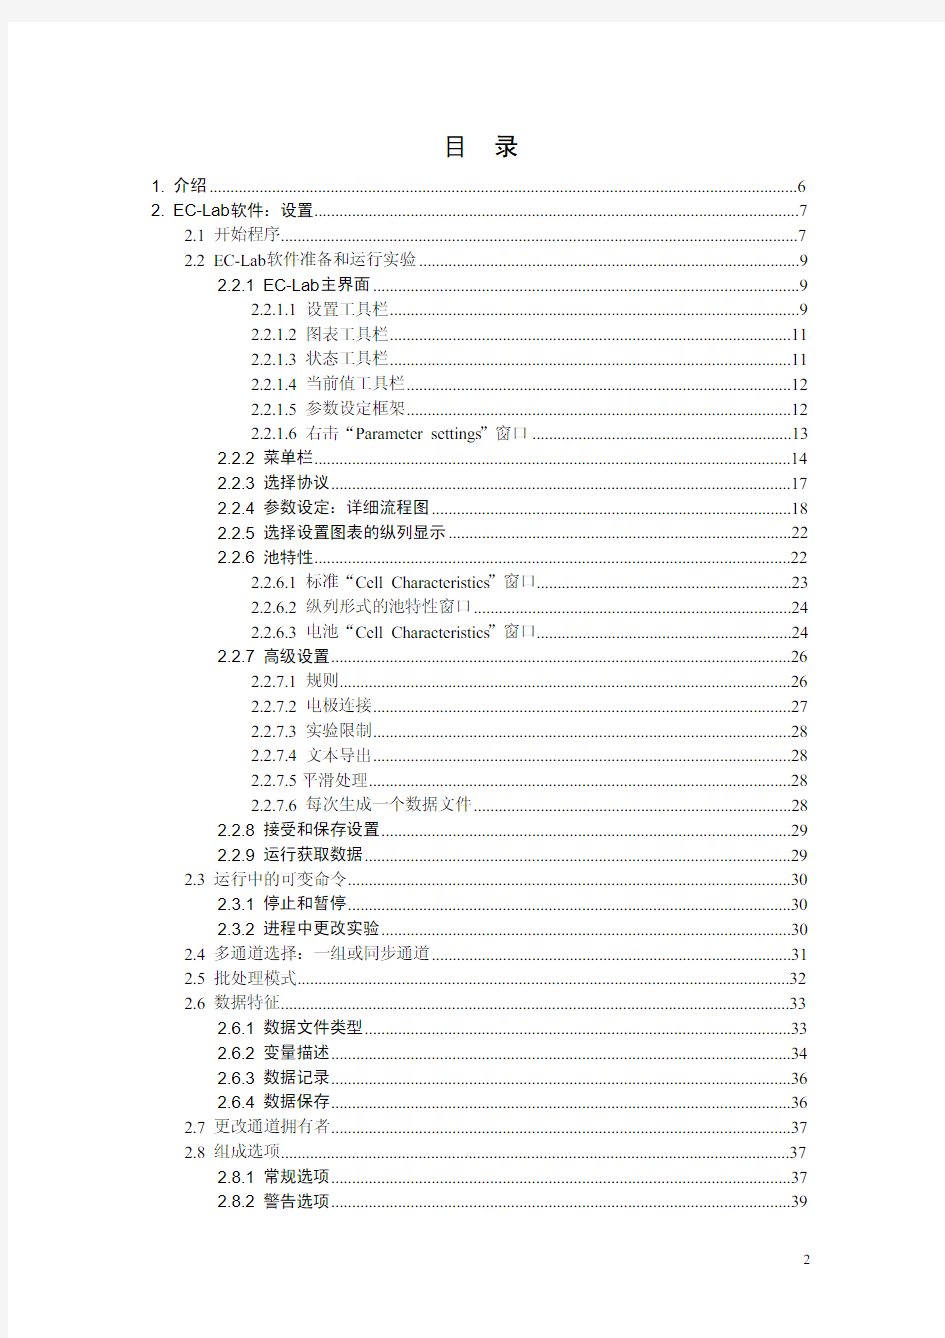 EC-Lab software 中文使用手册